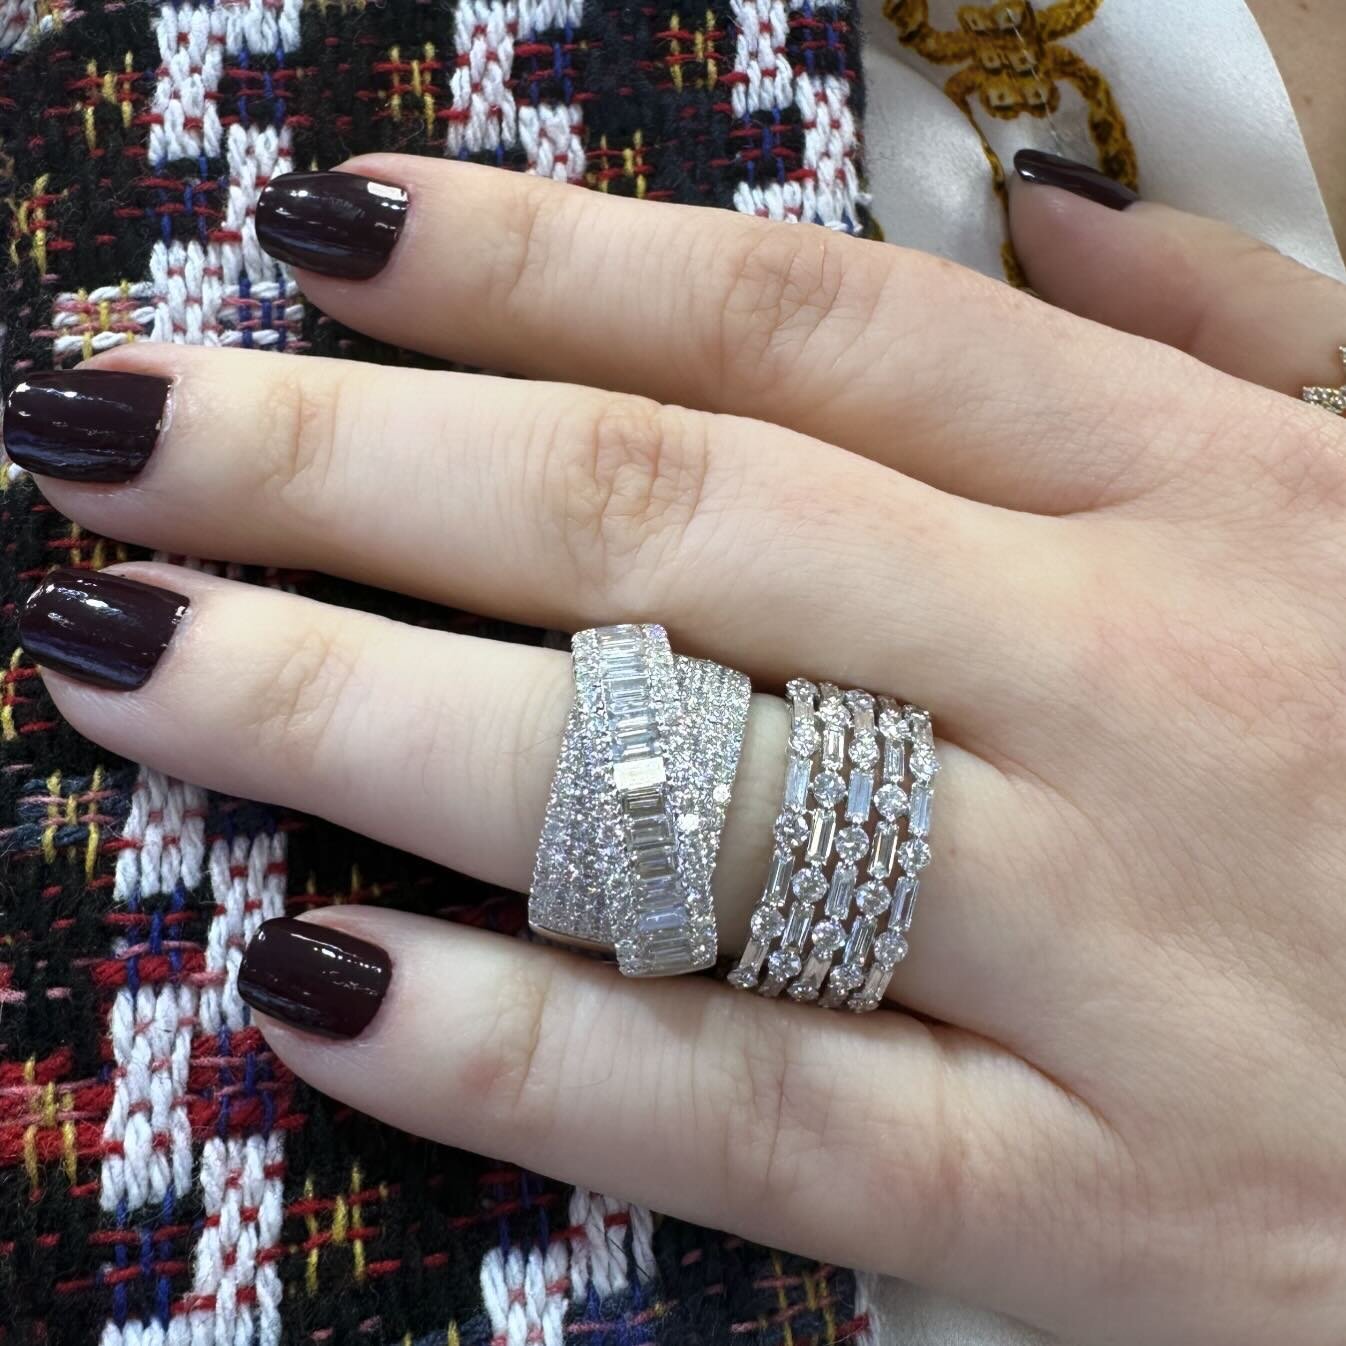 Spring into something new and fabulous! 

#scfinejewelry #diamonds #luxury #fashion #instagram